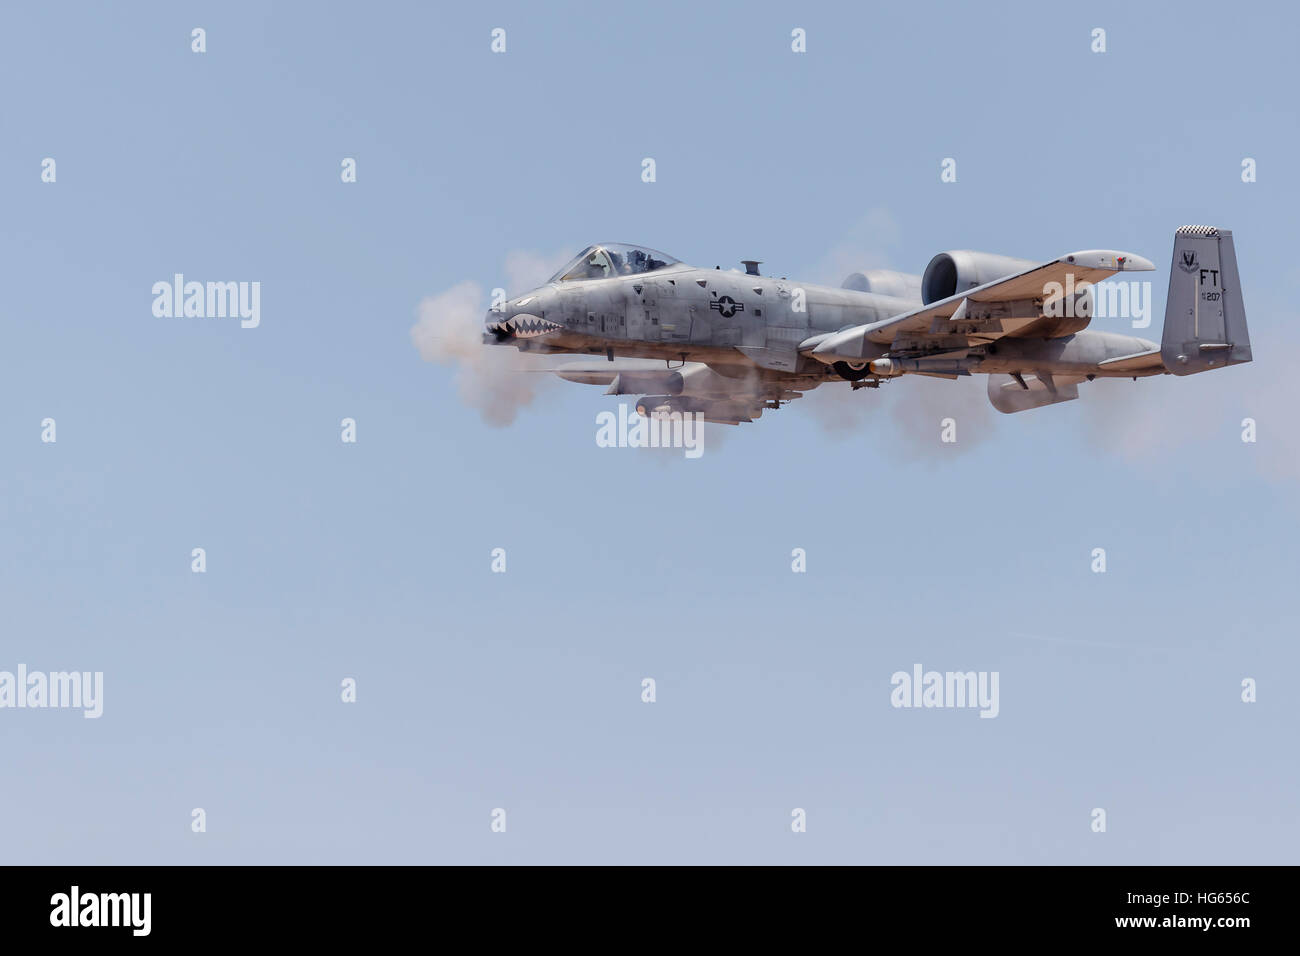 A U.S. Air Force A-10 Thunderbolt II fires its 30mm gun at a strafe target. Stock Photo